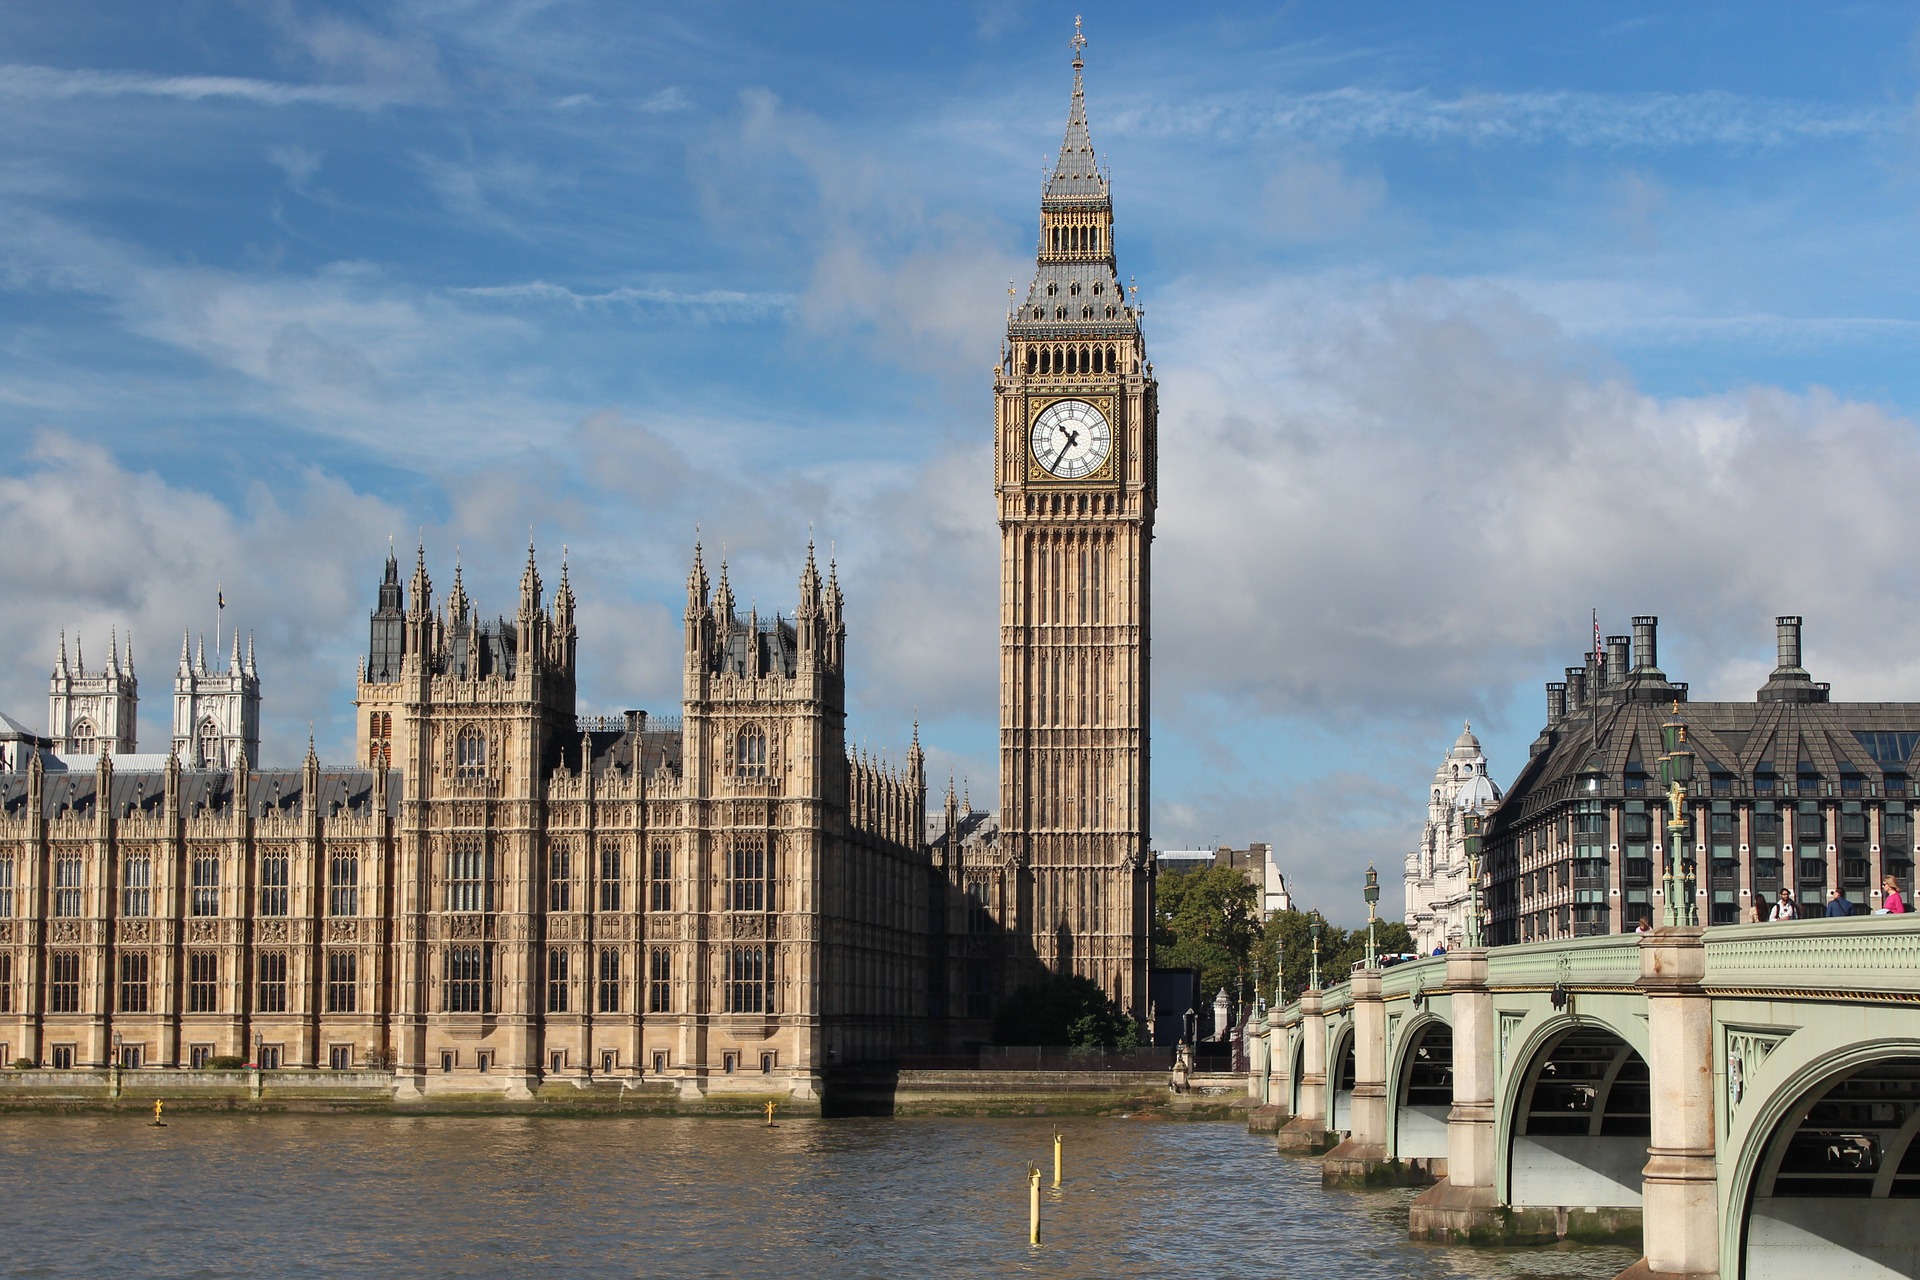 Westminster and Big Ben